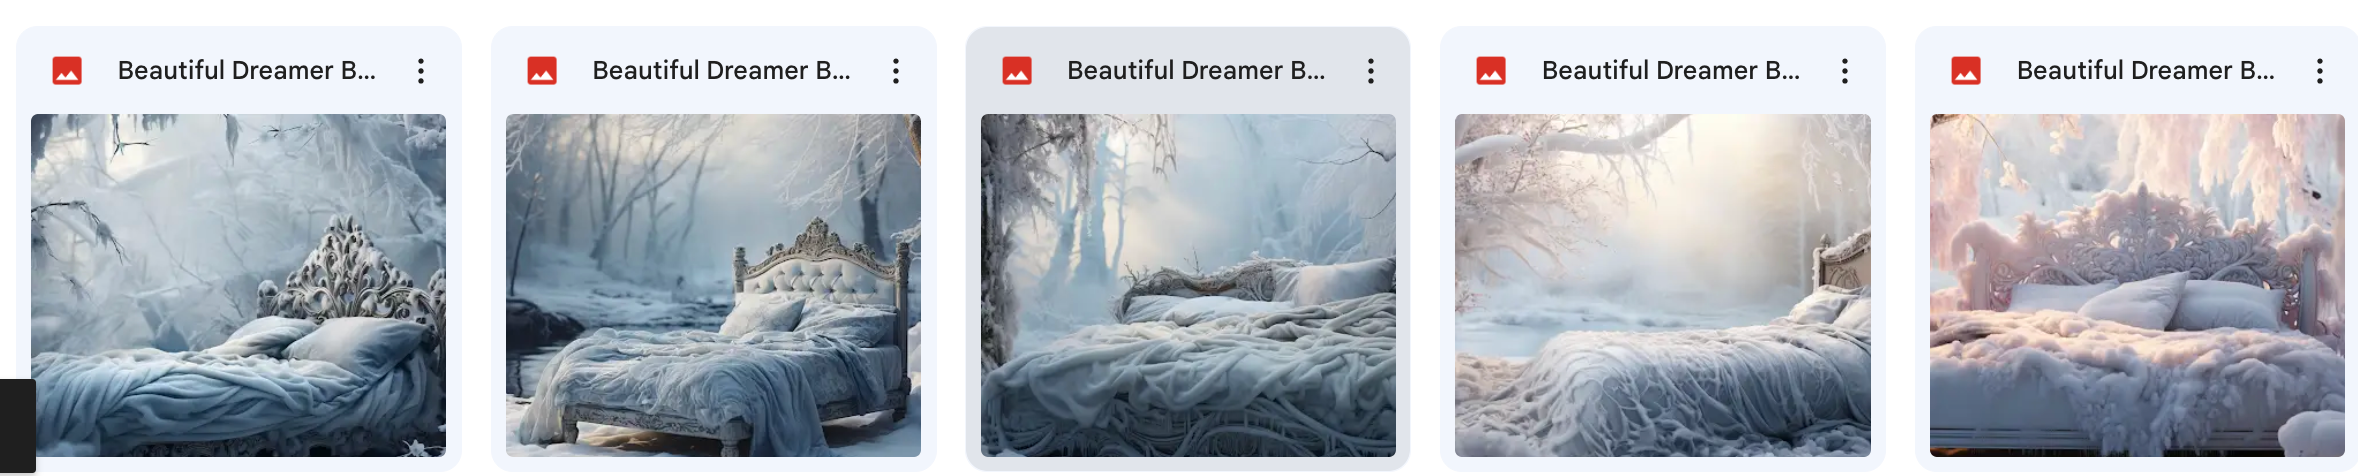 Beautiful Dreamers Asset Pack - Meg Bitton Productions